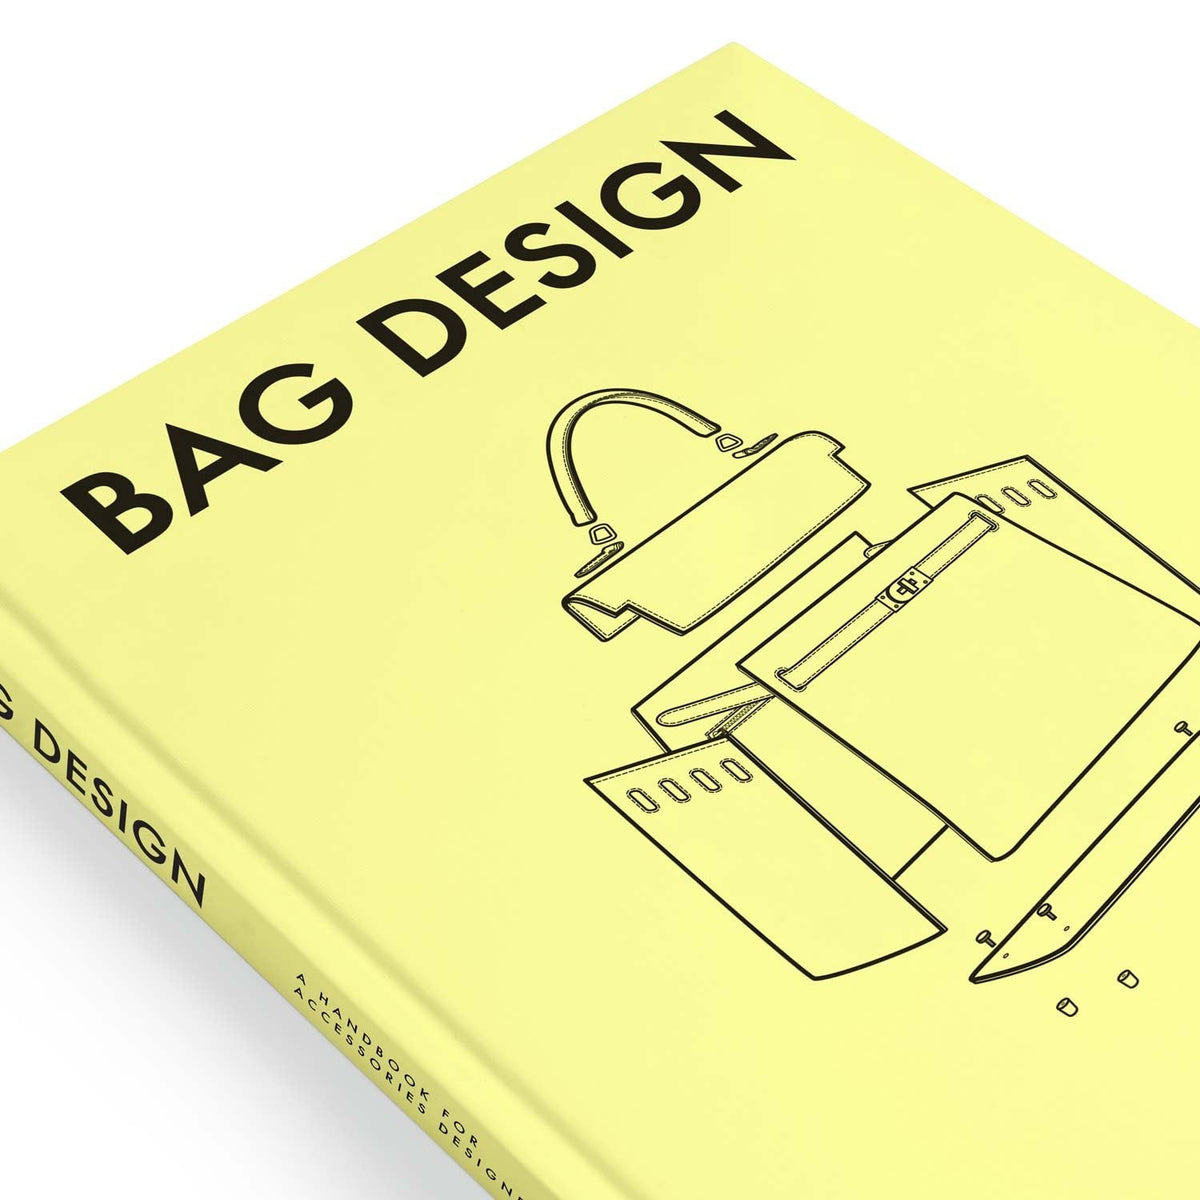 Bag Design by Fashionary